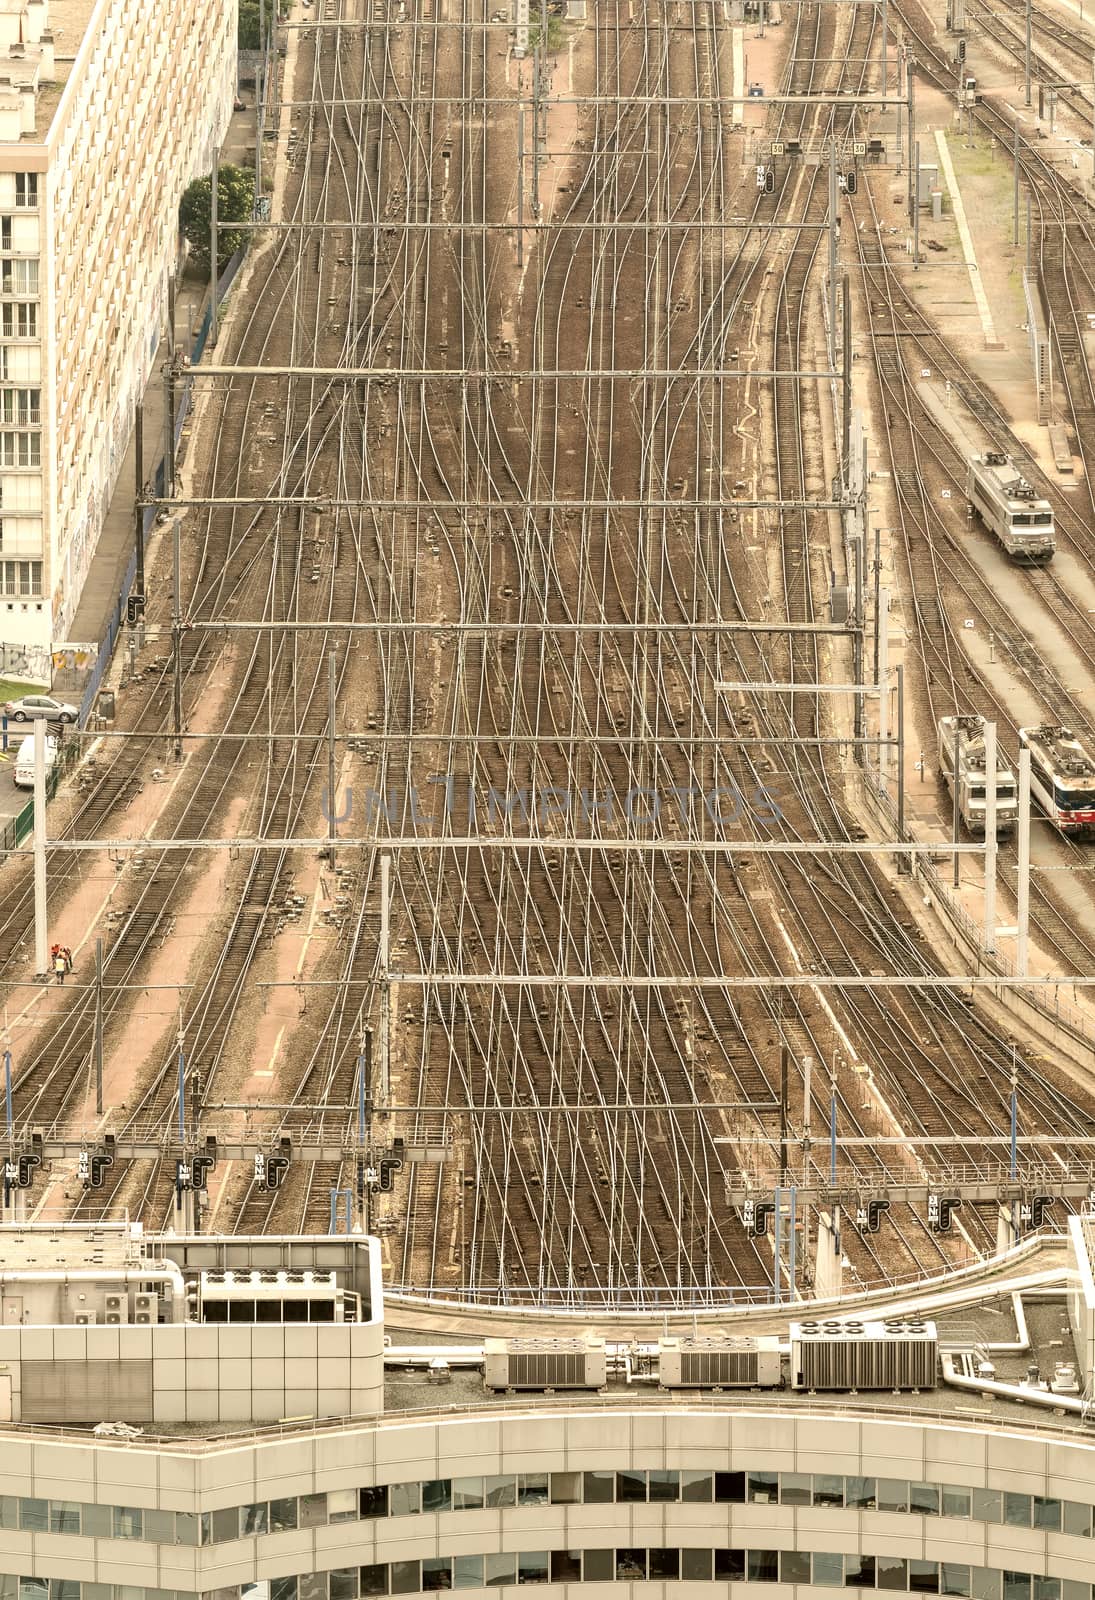 Paris train station, France. Aerial view by jovannig